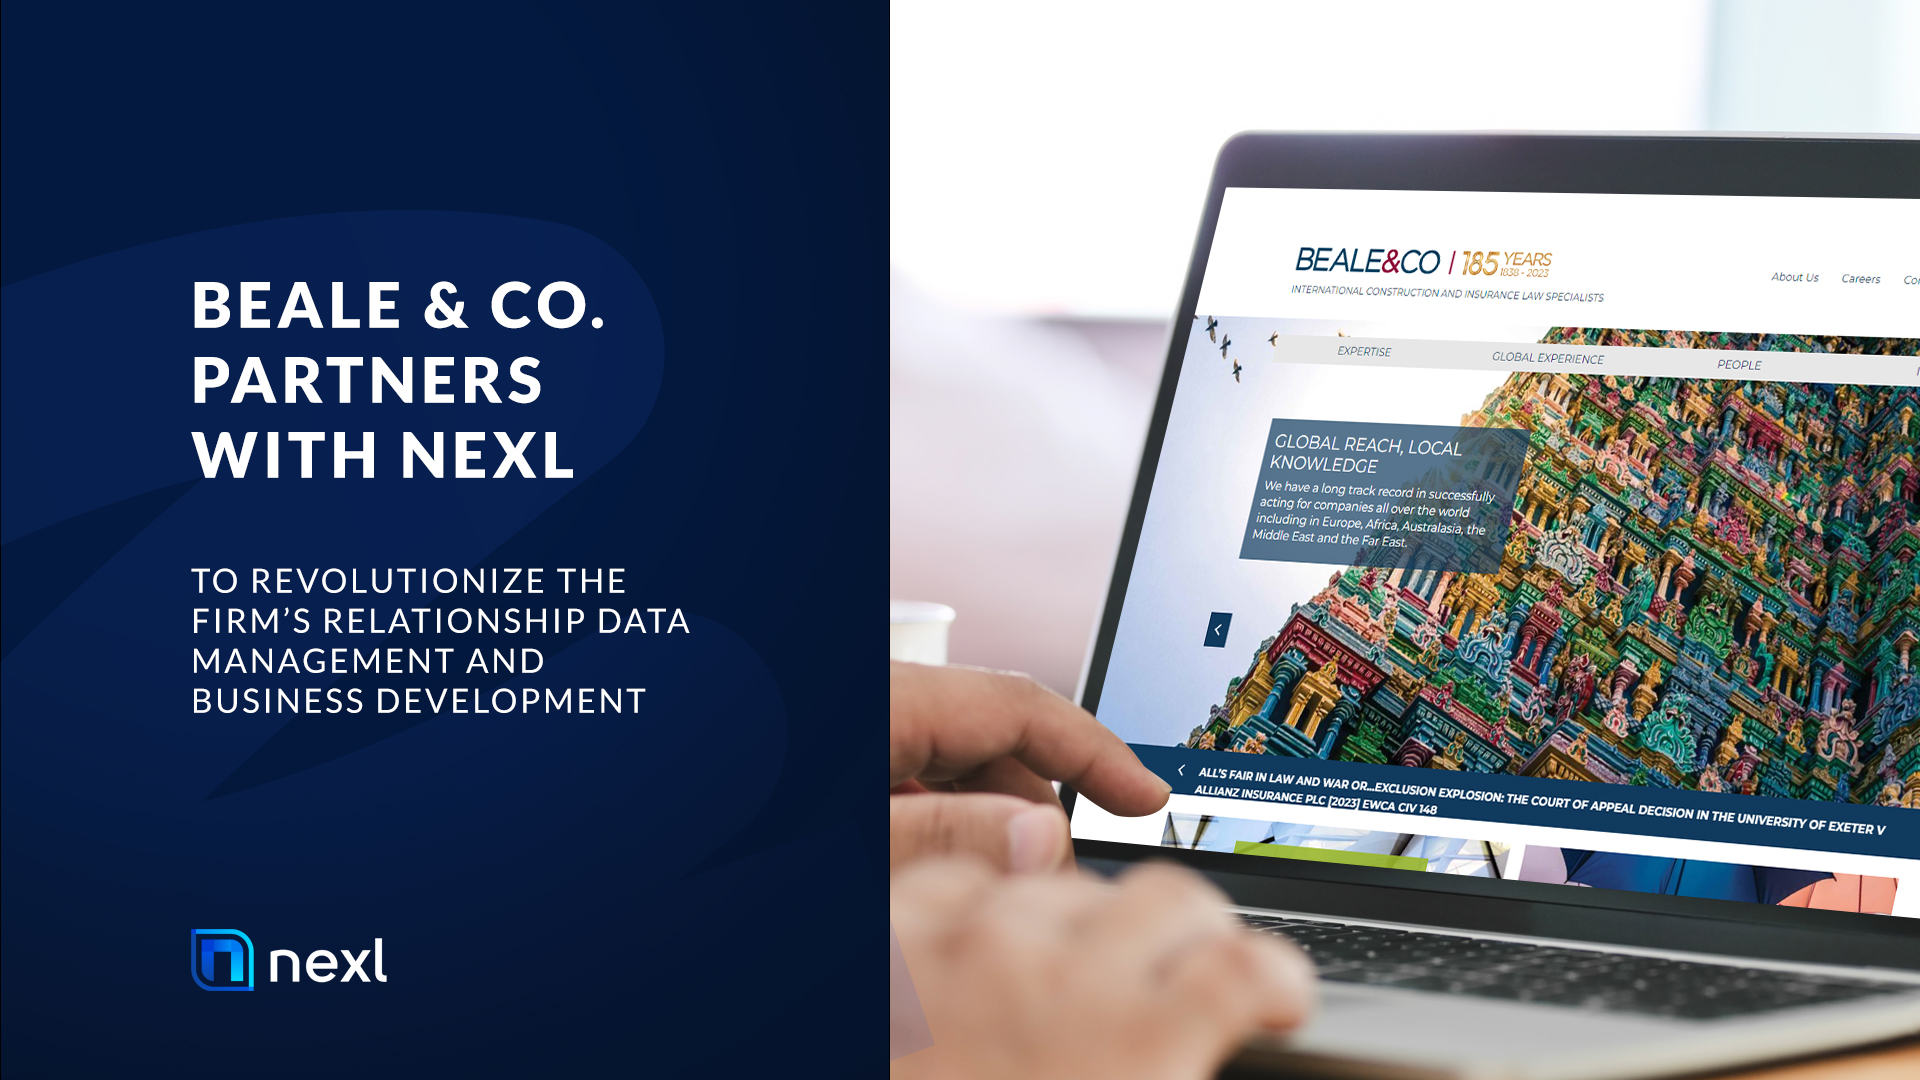 Beale & Co Partnership with Nexl